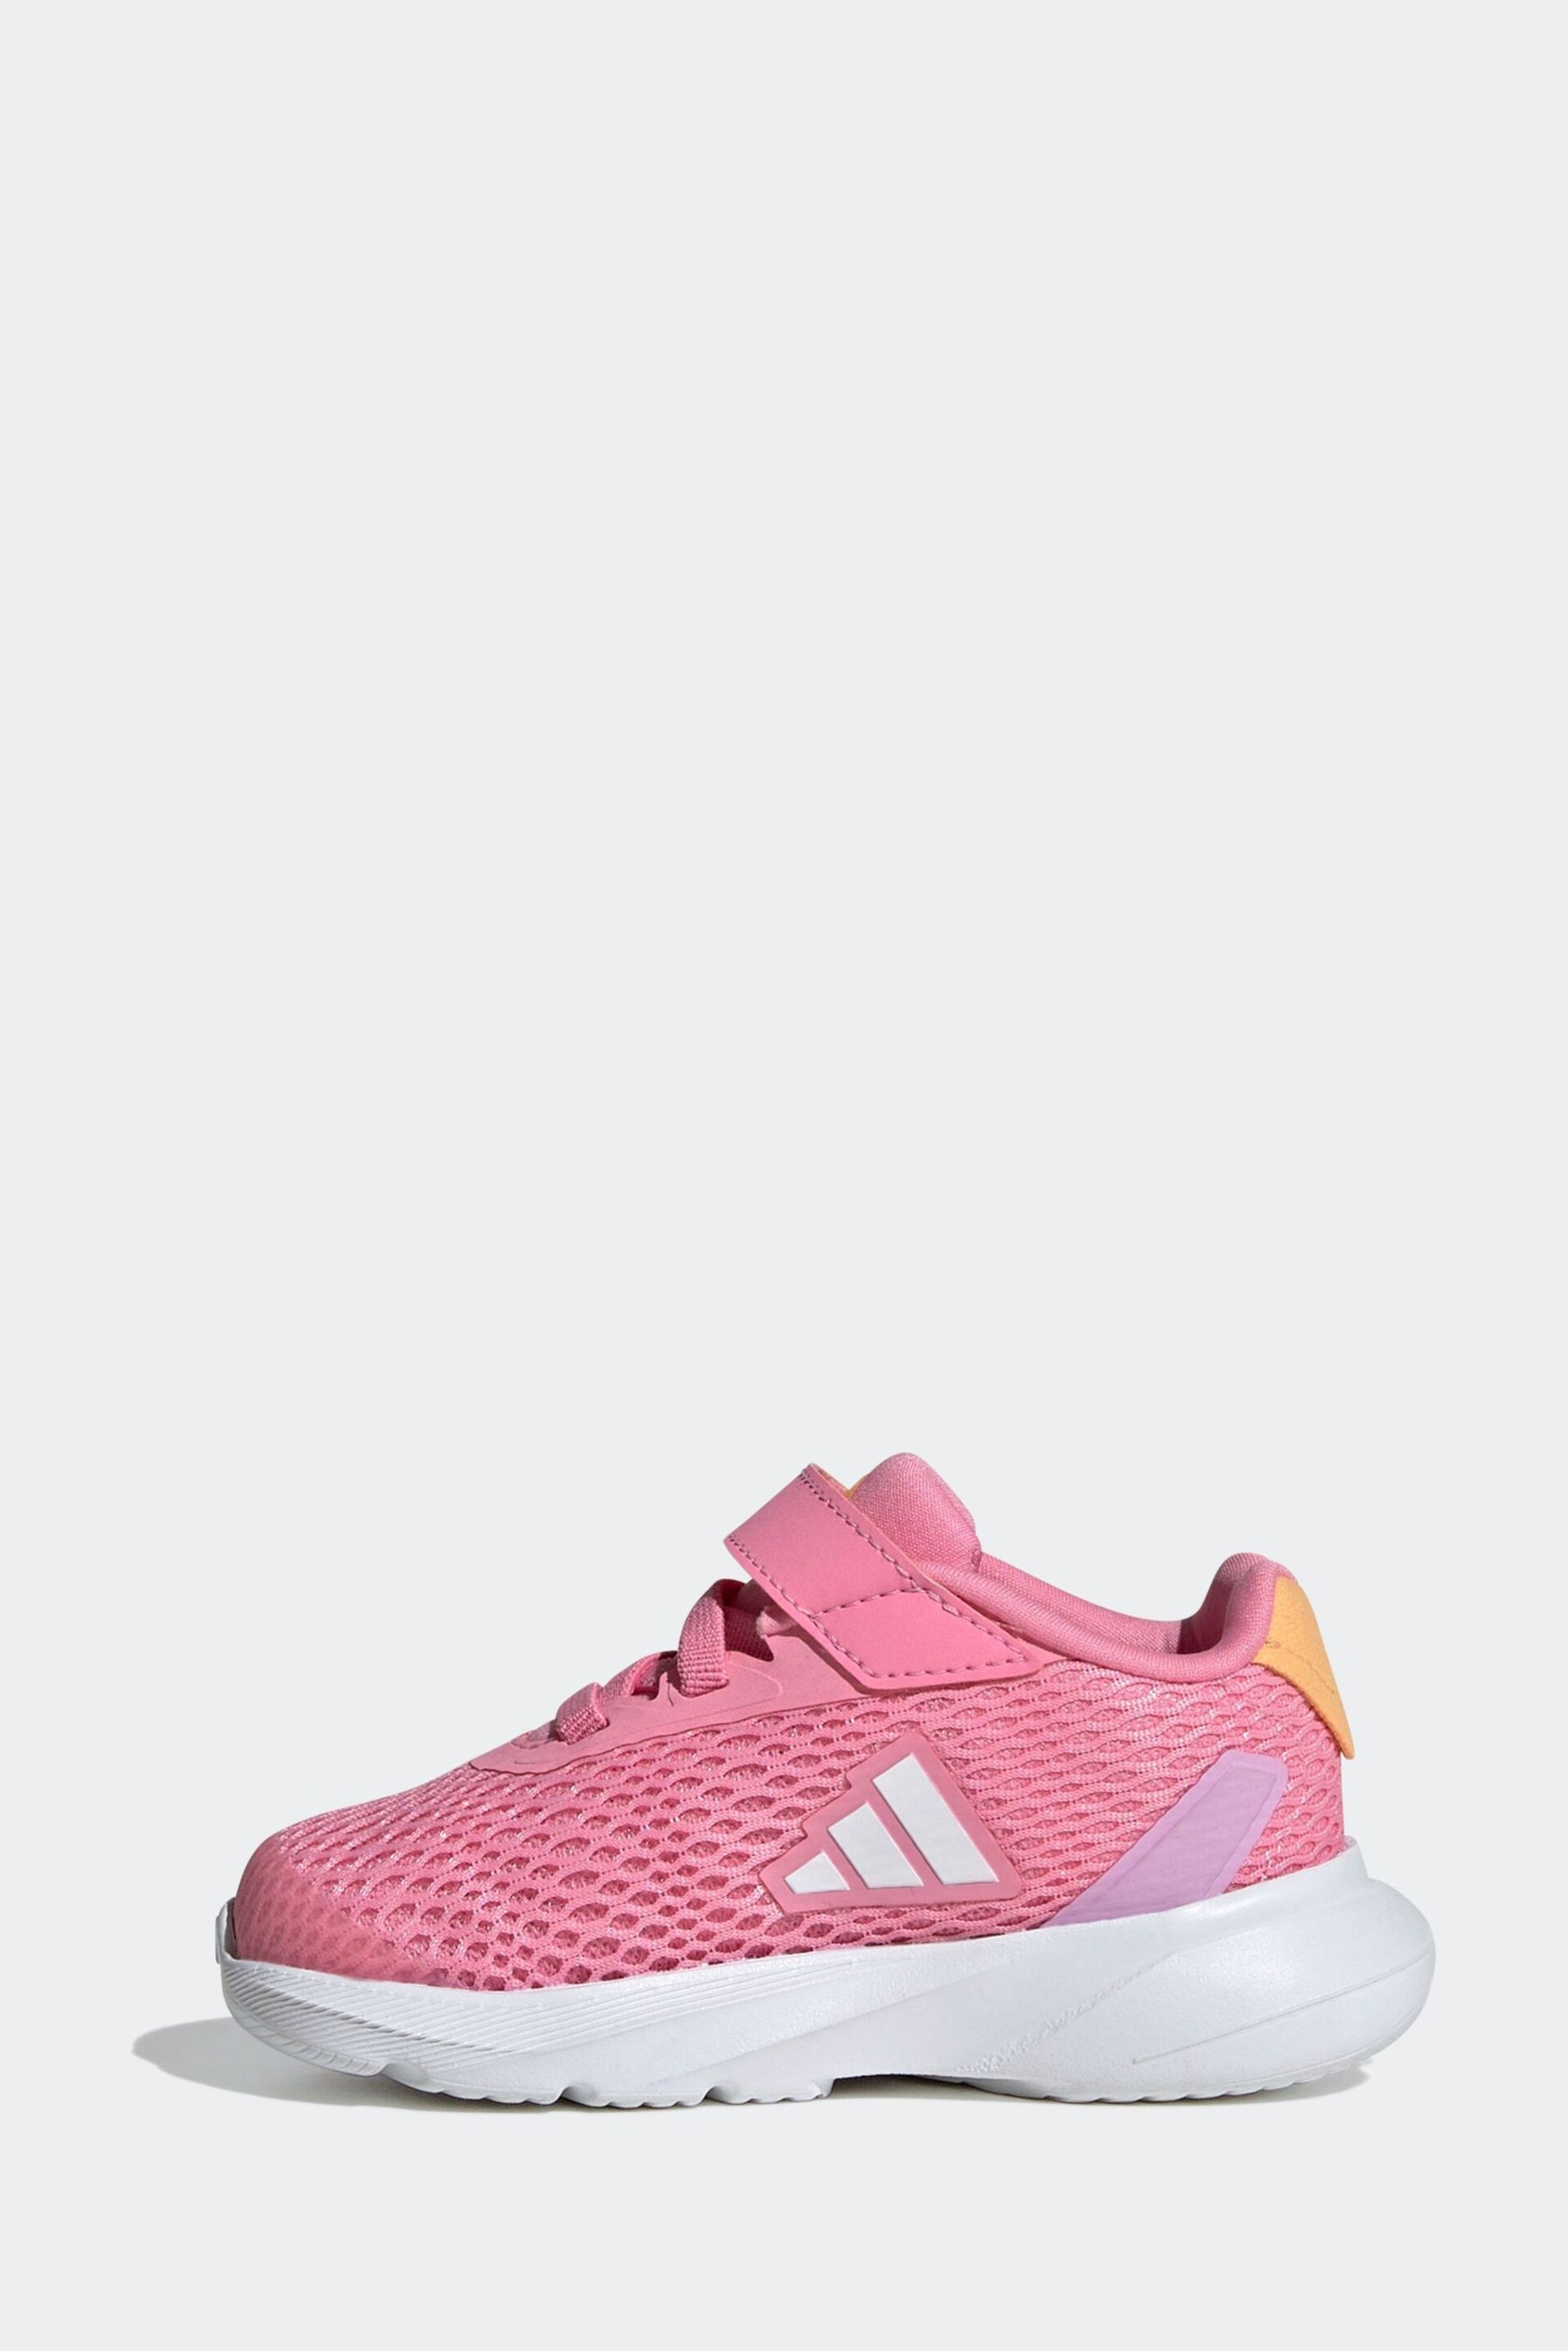 adidas Pink Duramo Trainers - Image 2 of 8